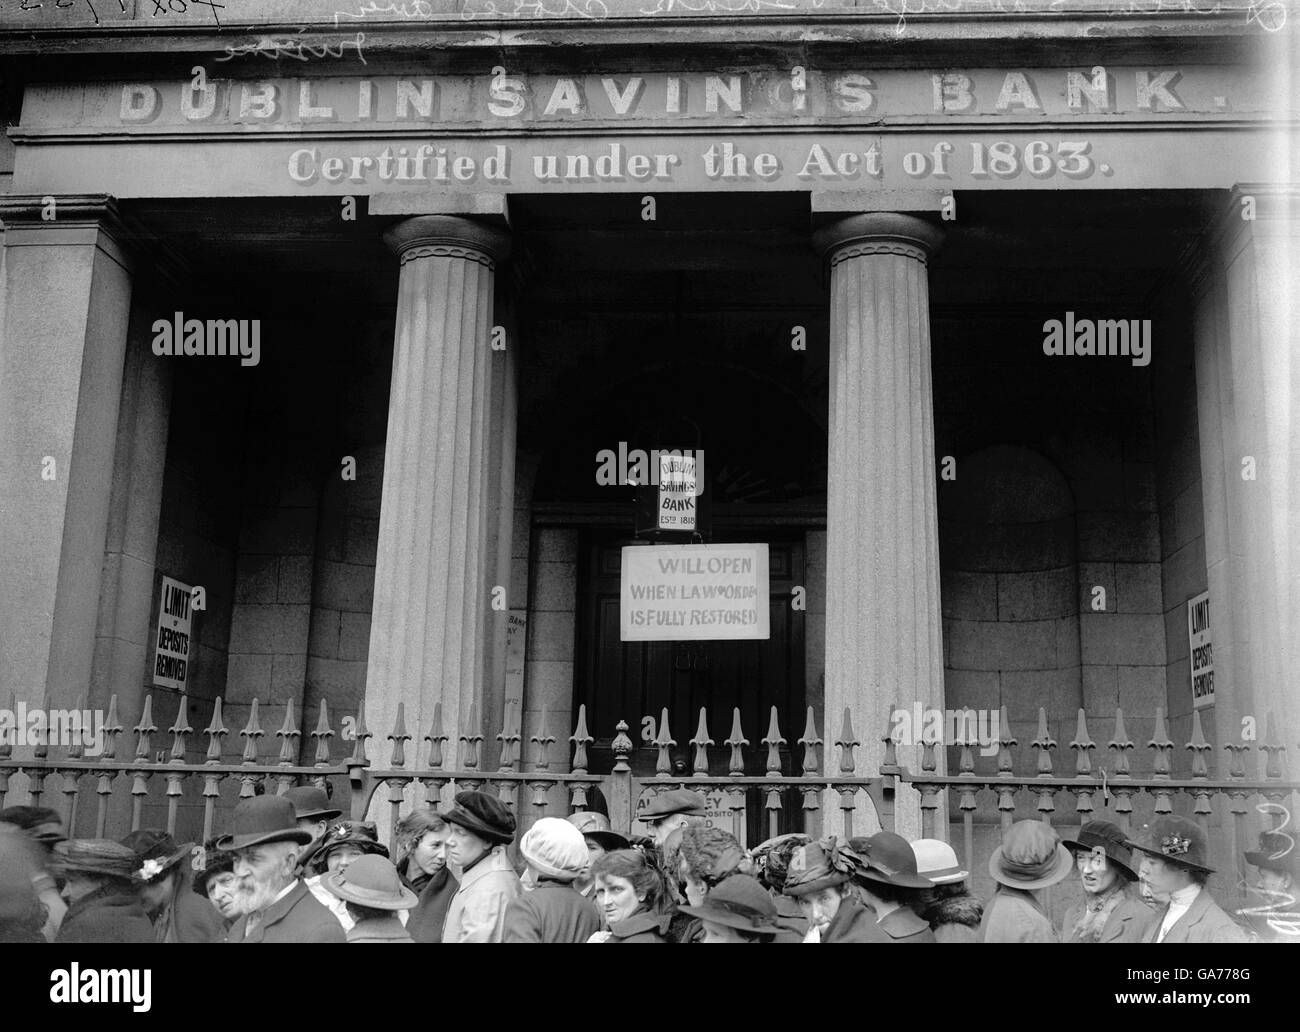 Die Dublin Savings Bank schloss nach dem Sinn Fein Rising. Stockfoto